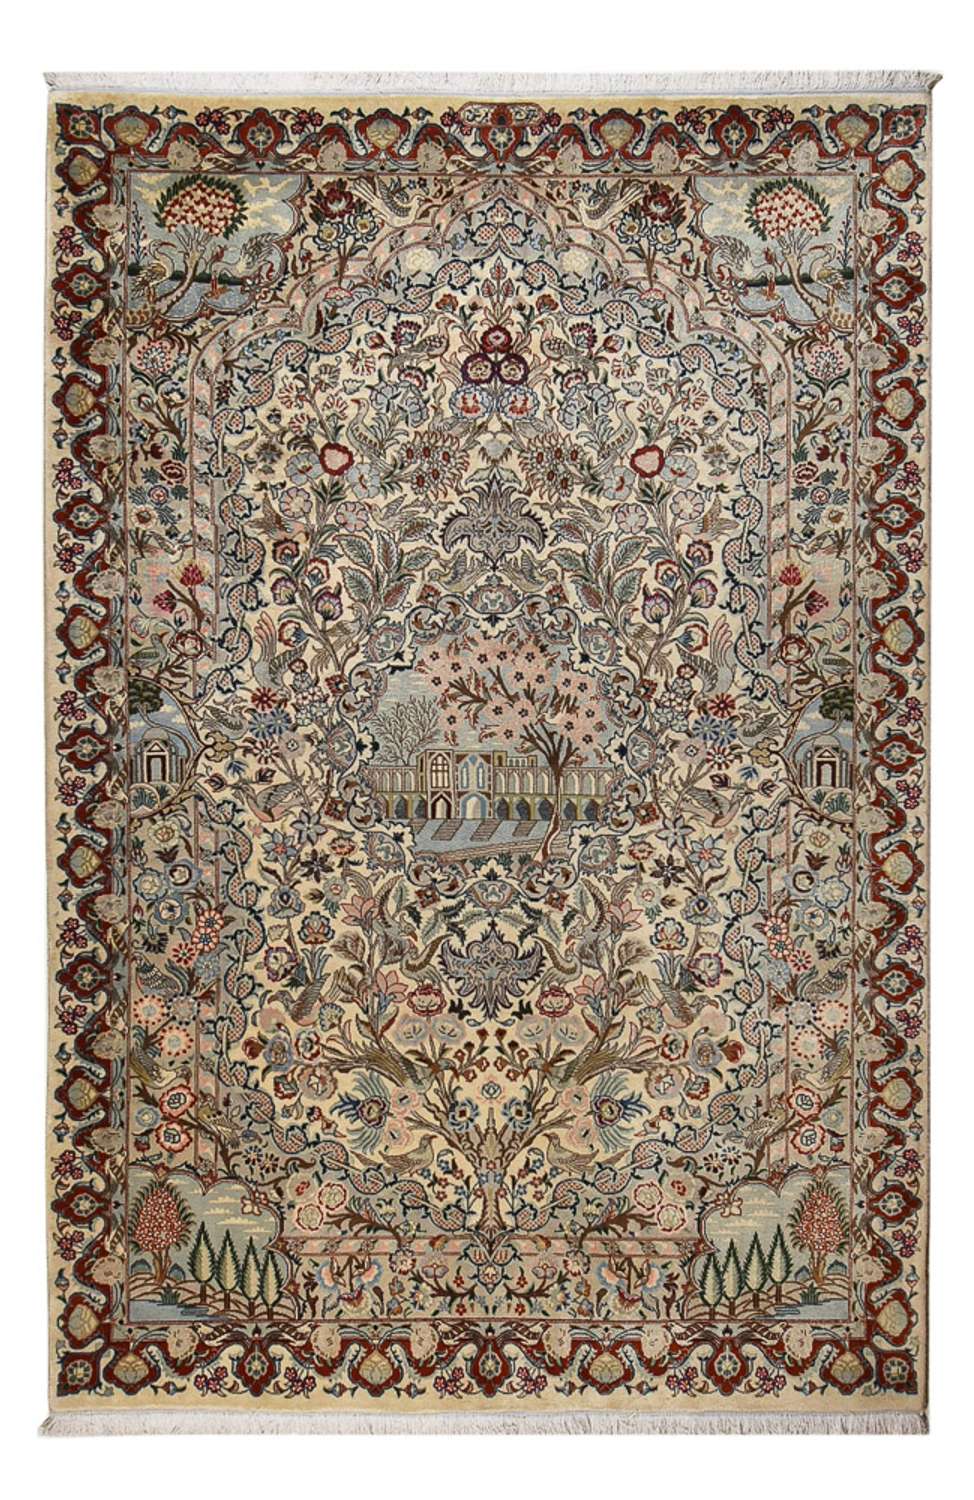 Dywan perski - Keshan - 301 x 201 cm - piaskowy